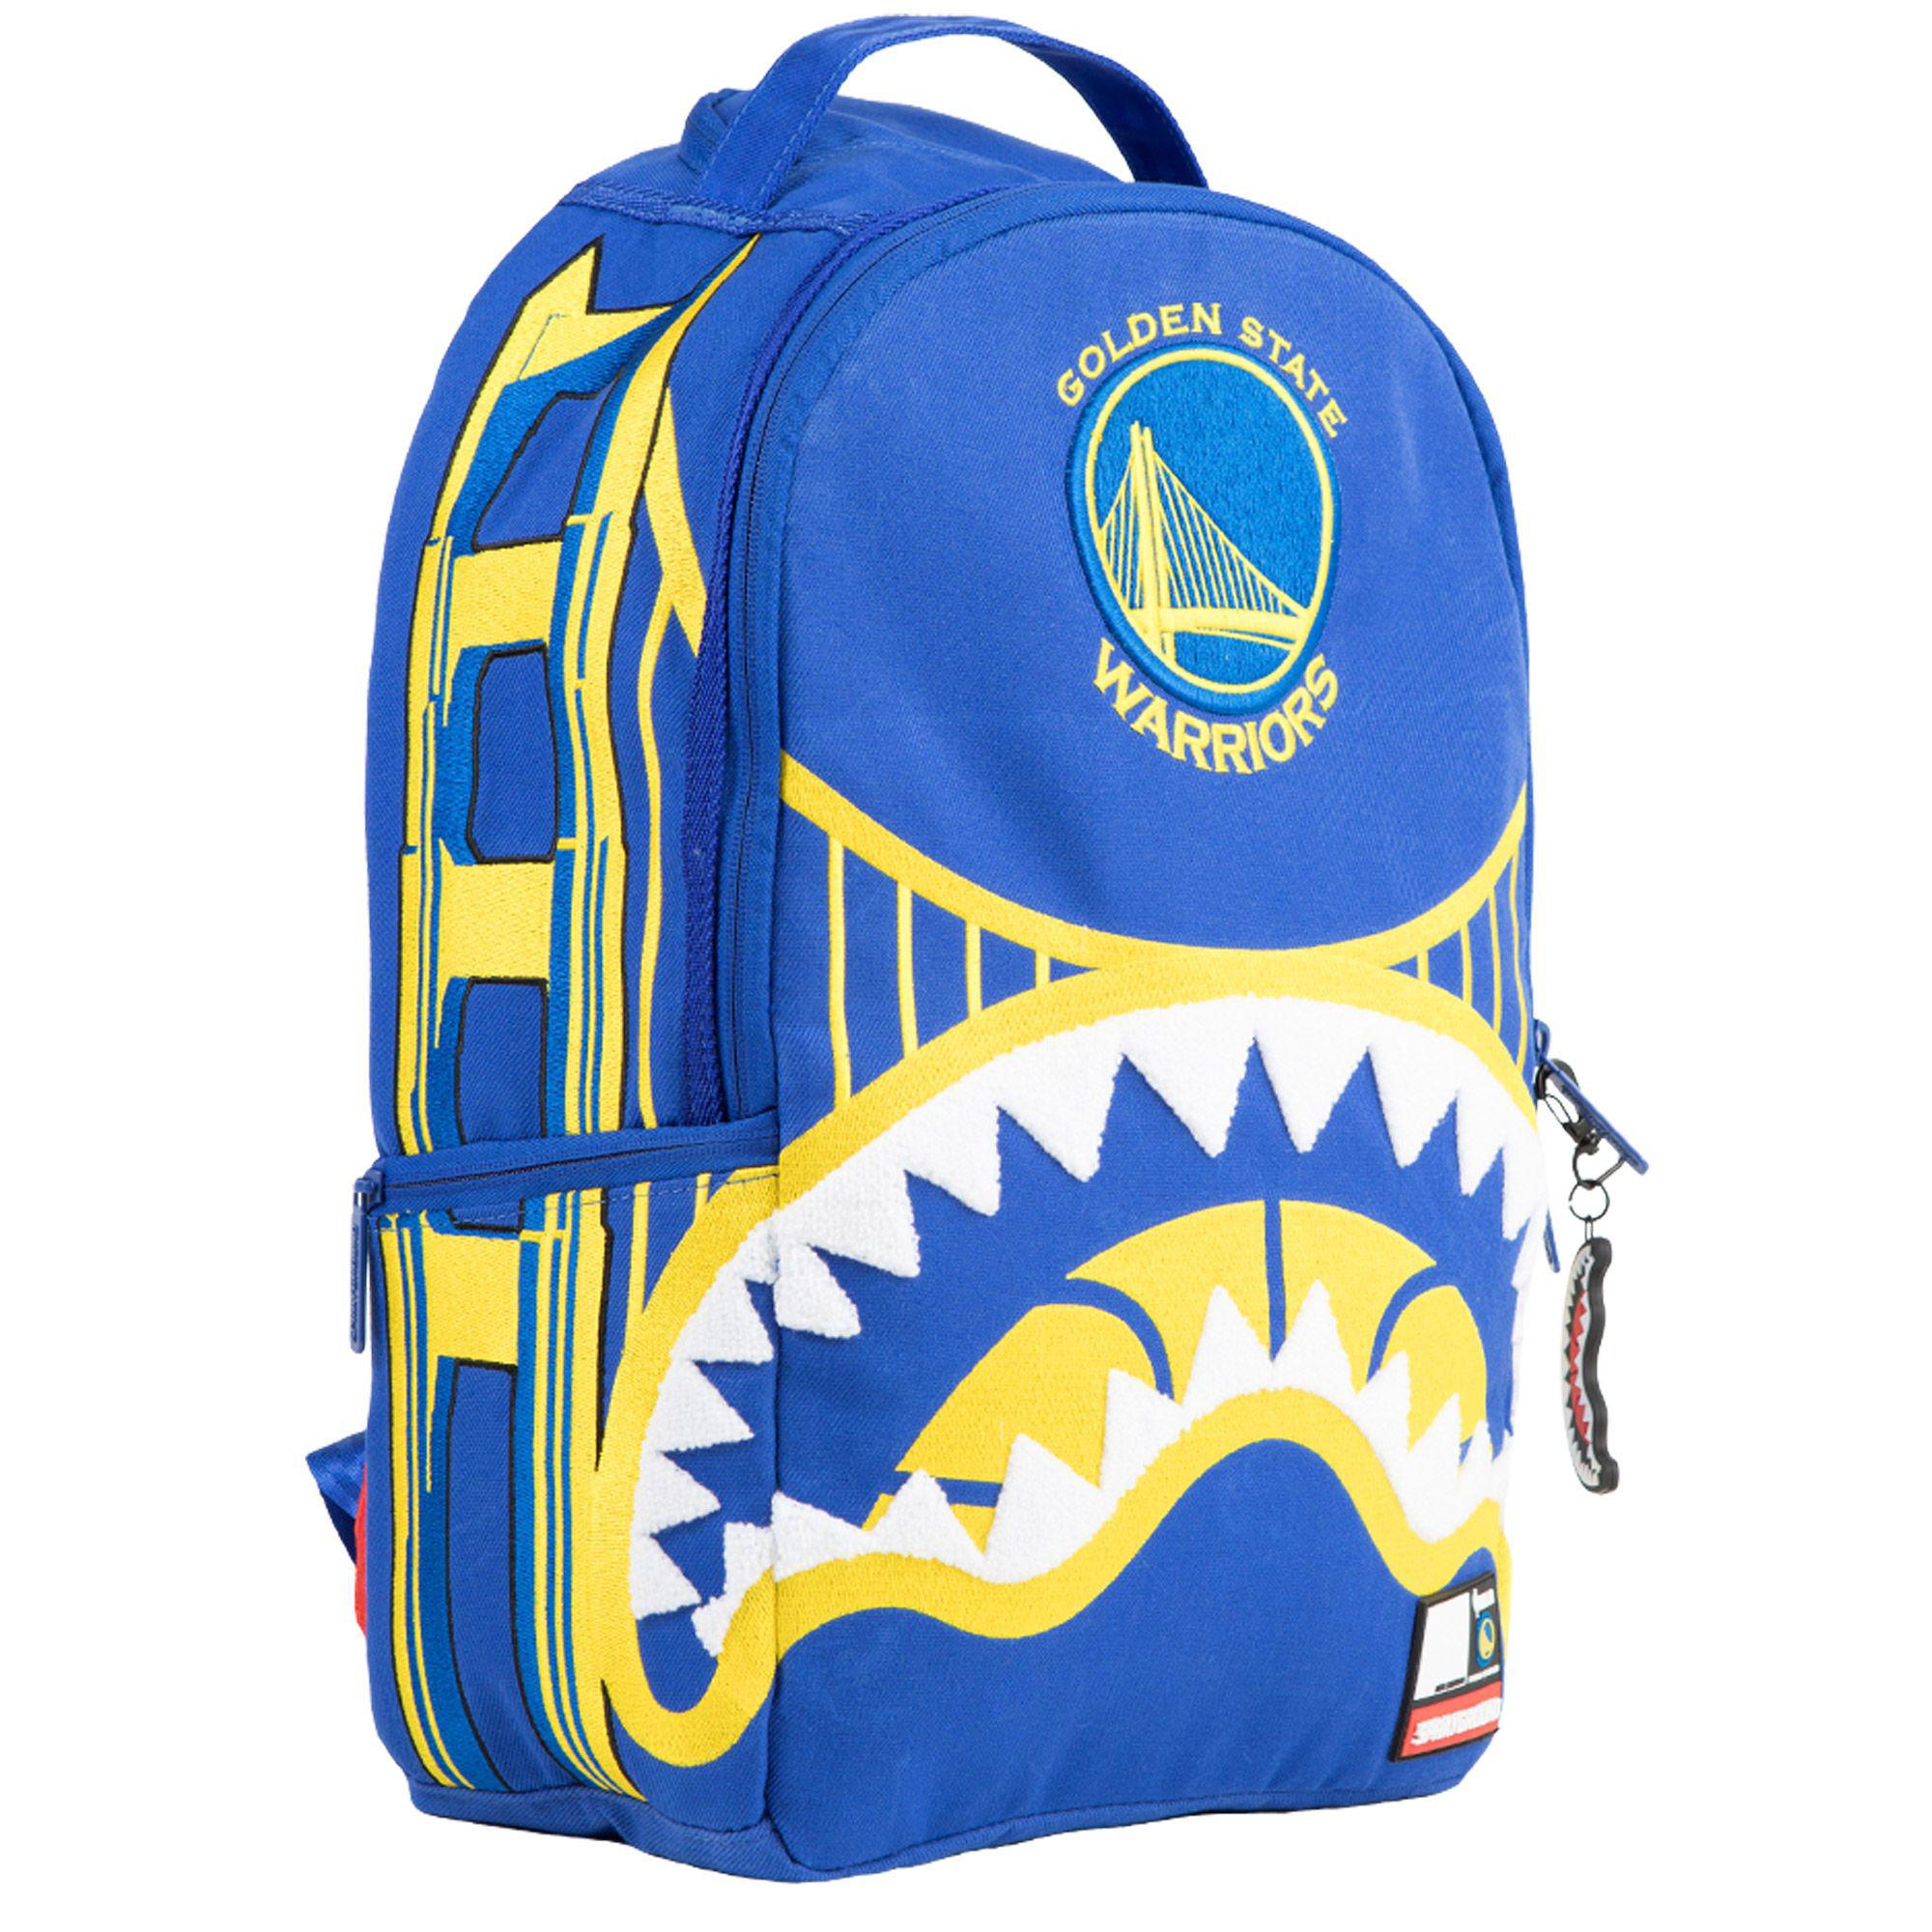 Sprayground Golden State Warriors Shark Mouth Backpack in Blue - Lyst